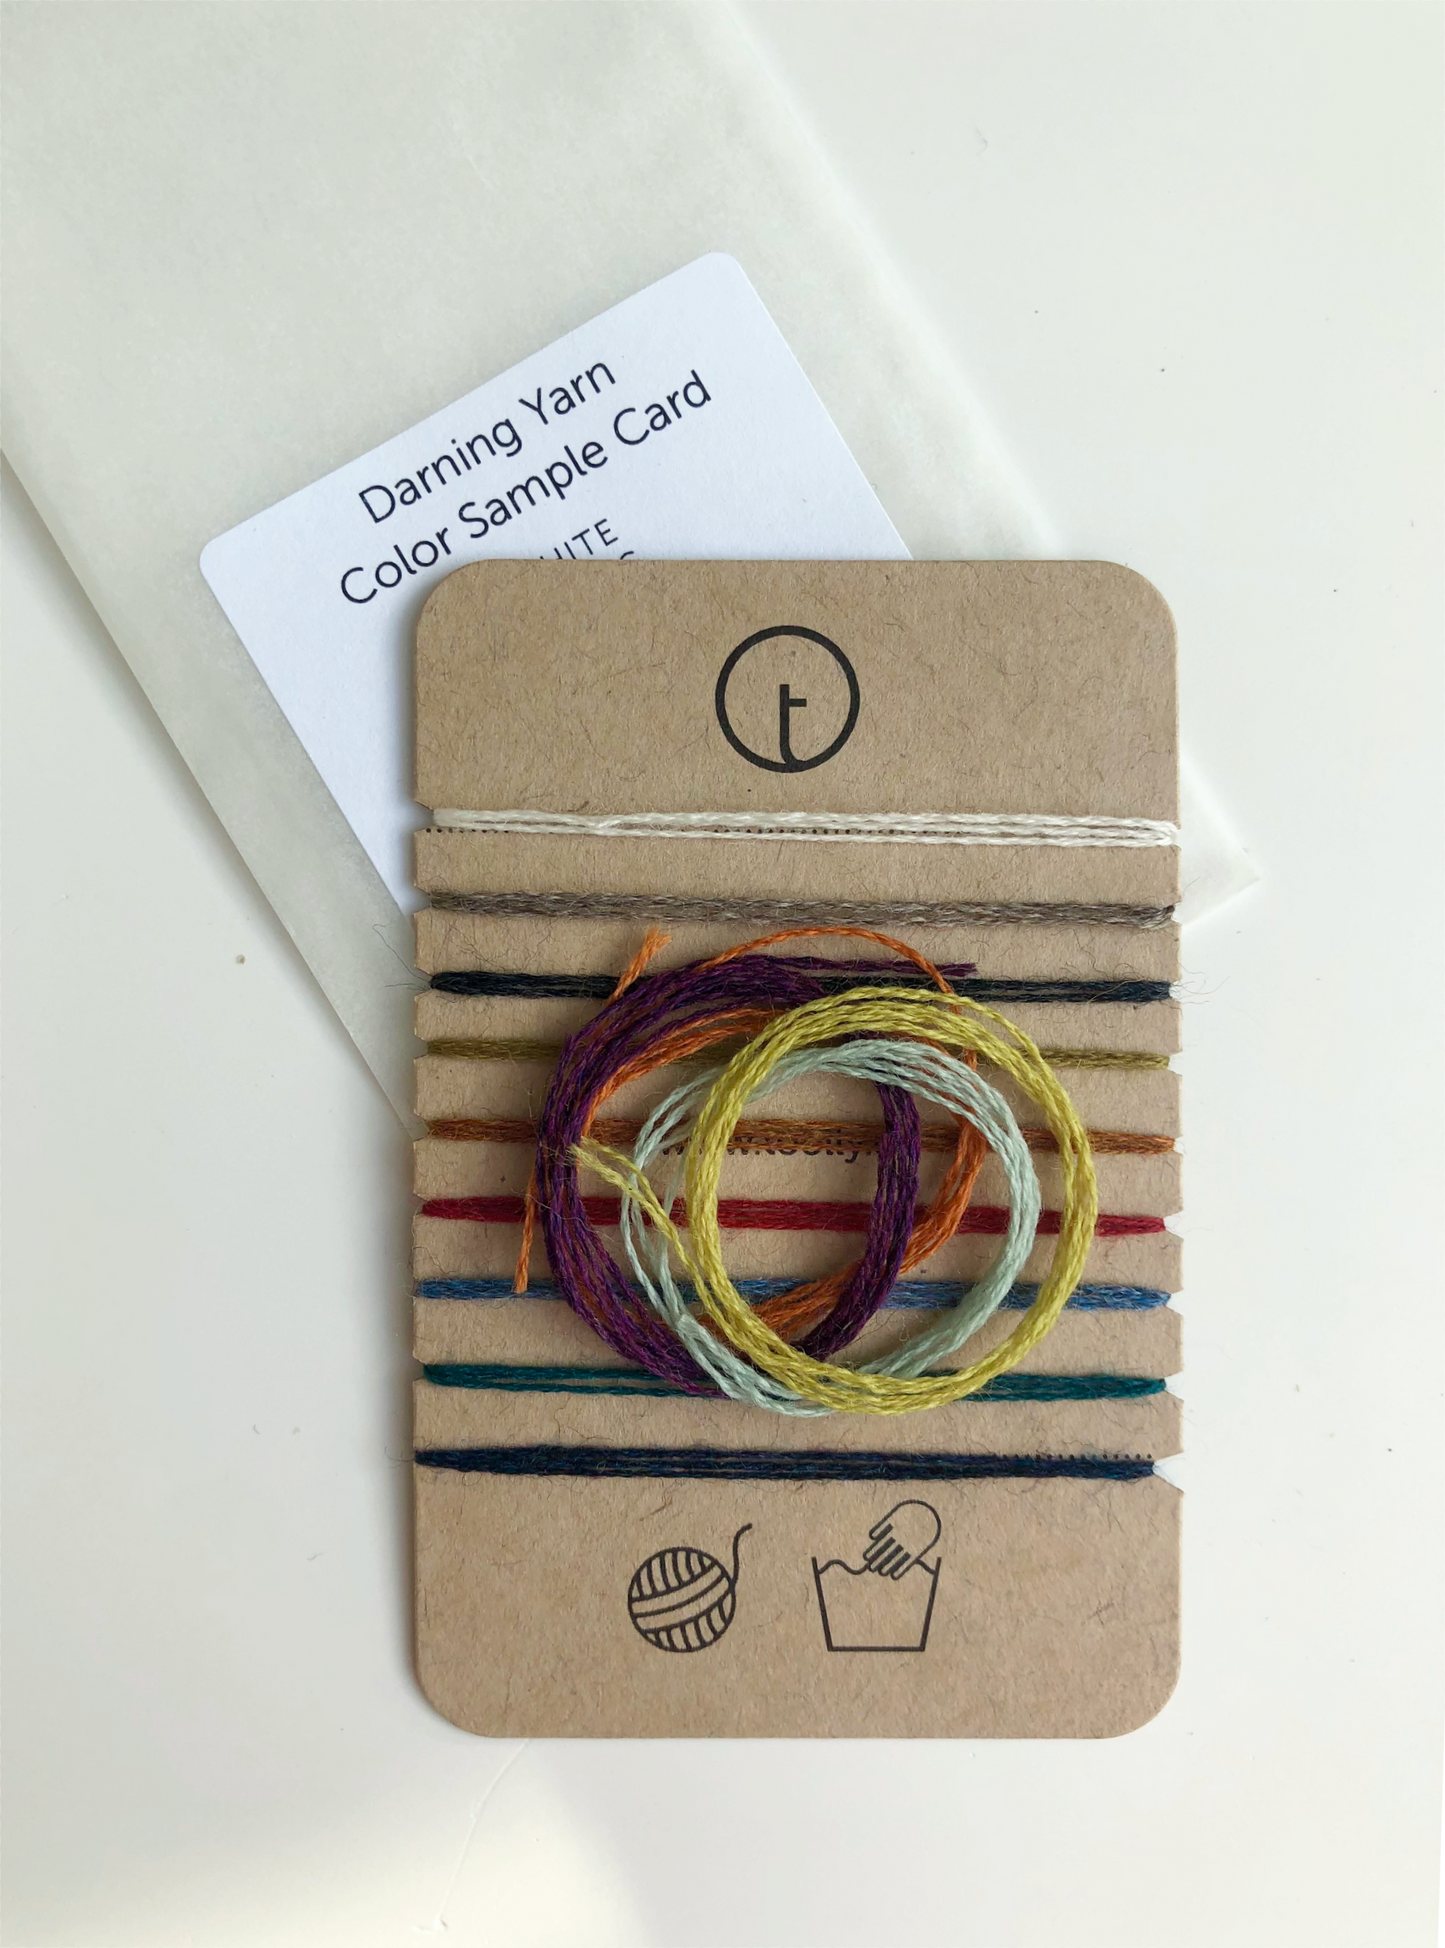 Darning yarn - Color Sample Card